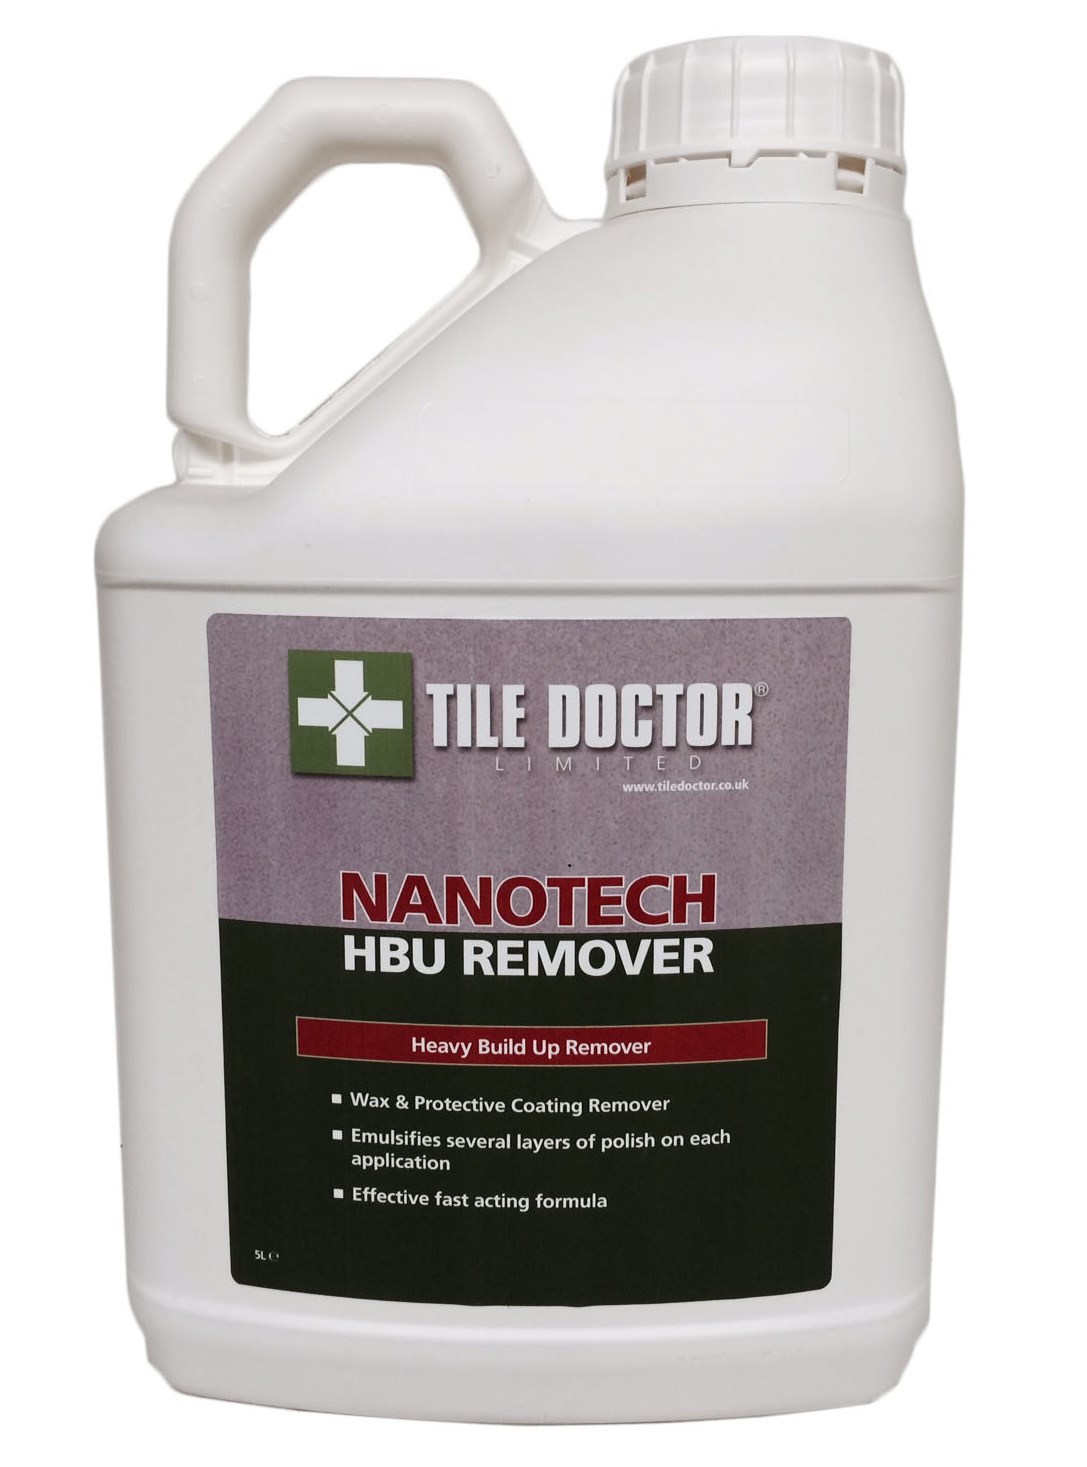 Tile Doctor Nanotech HBU Remover